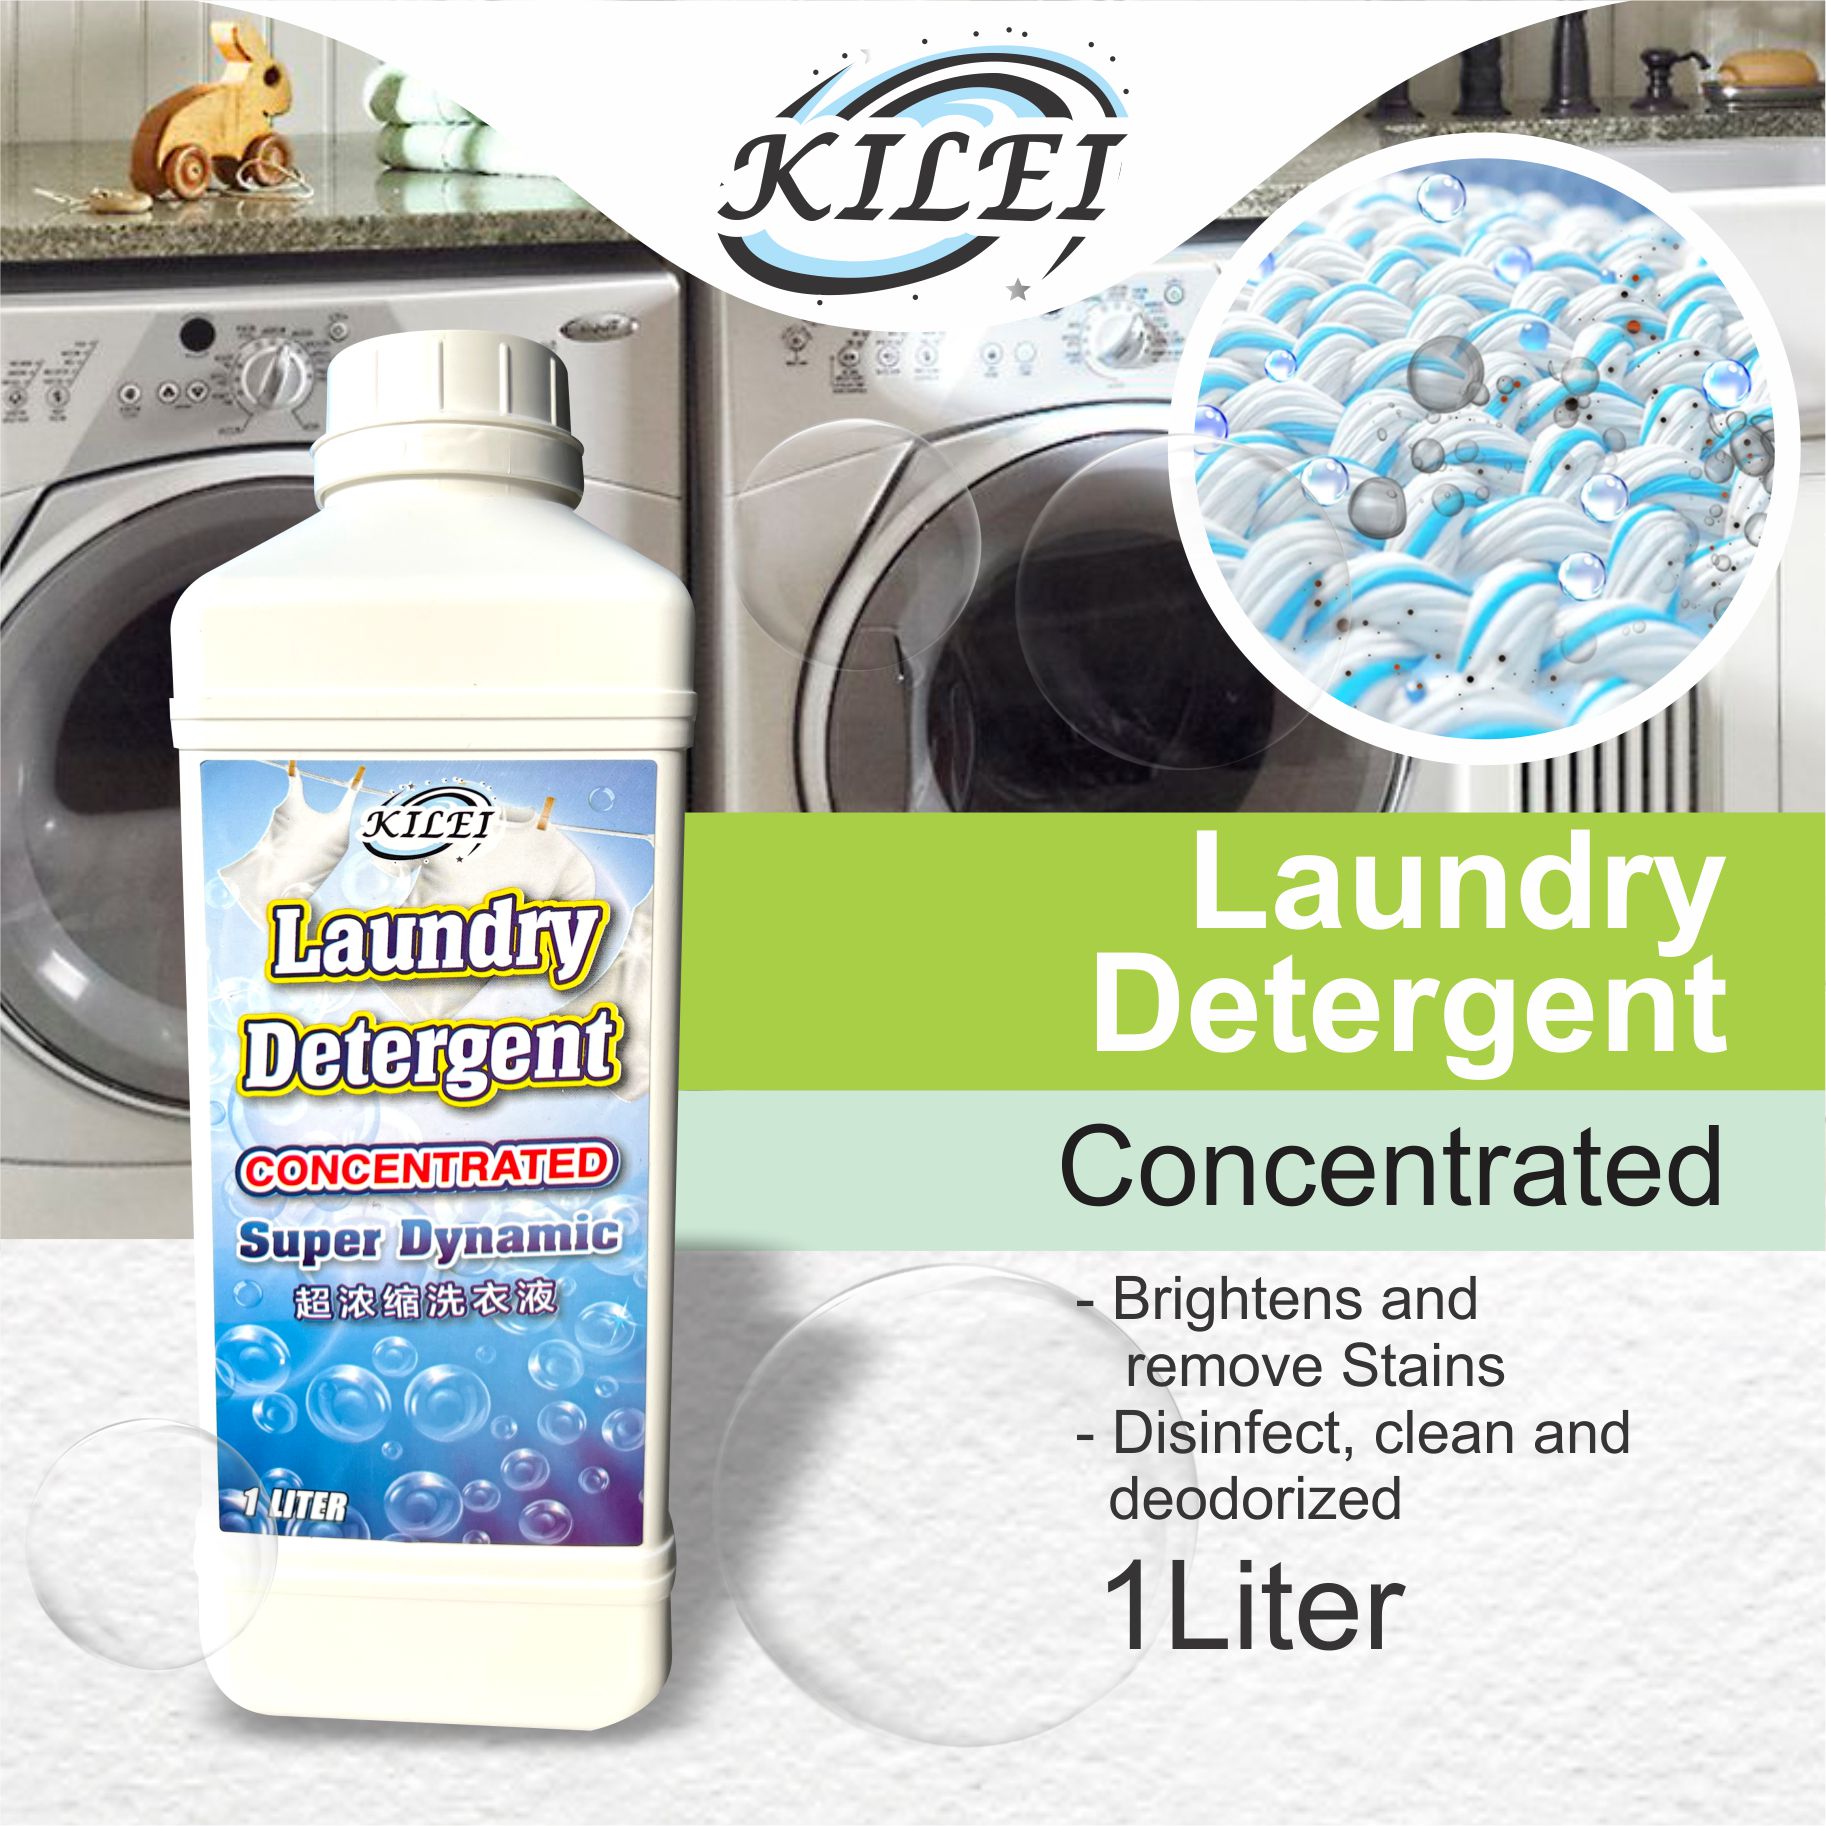 Kilei Laundry Detergent - 1 Liter 